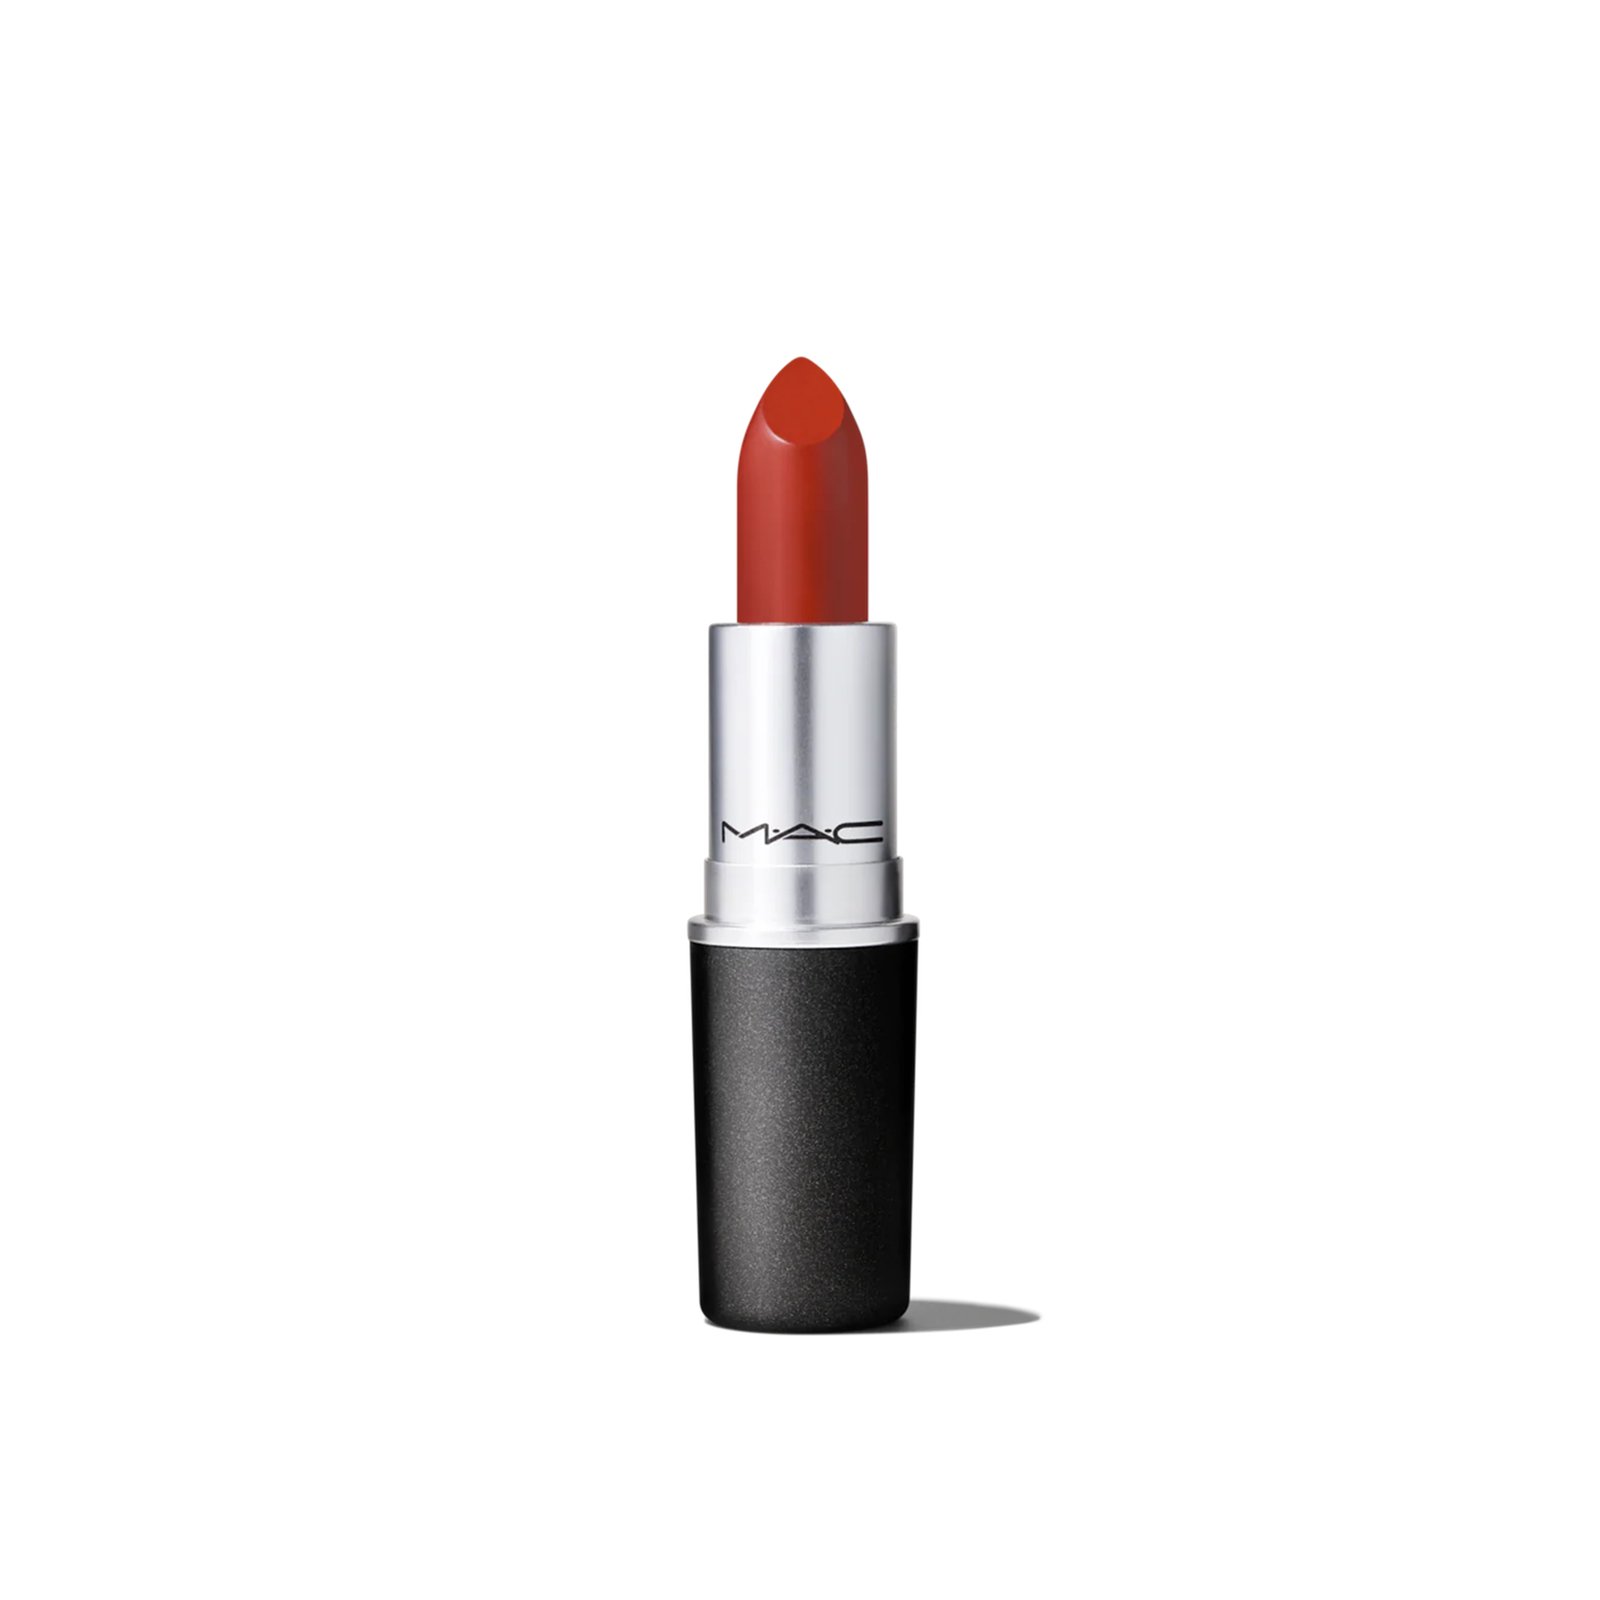 M.A.C Cosmetics Matte Lipstick 602 Chili 3g (0.10oz)